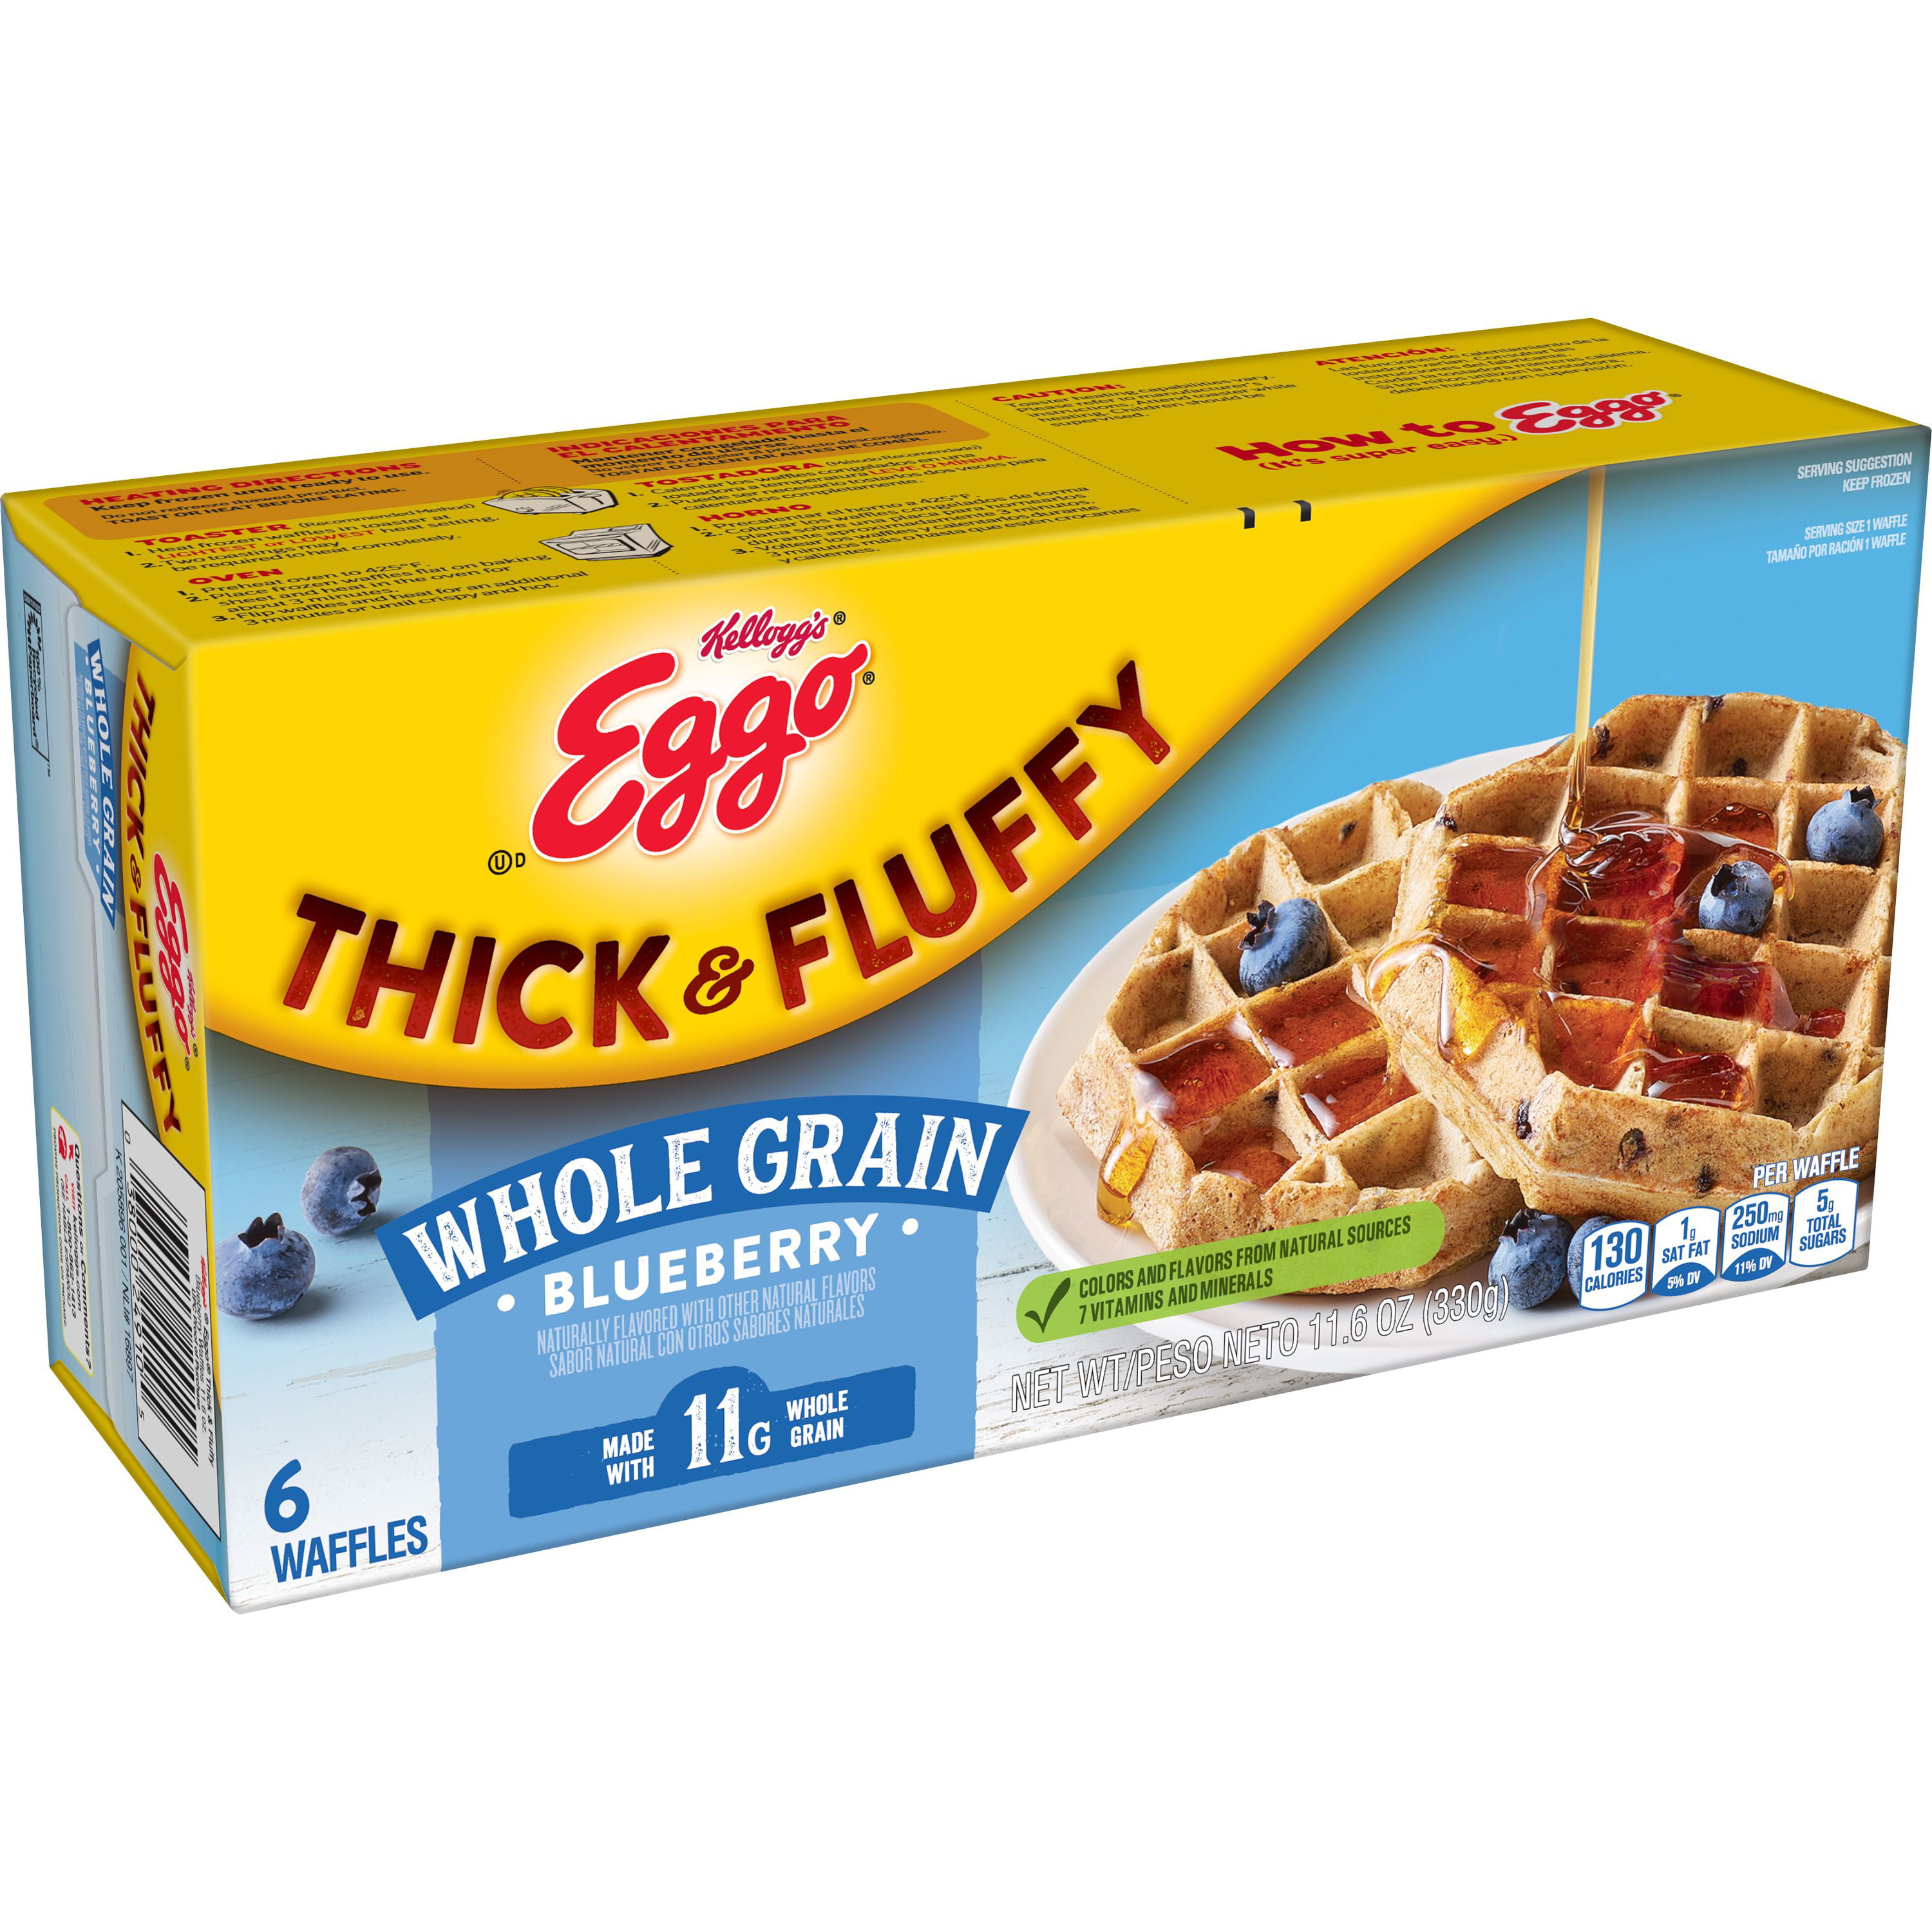 Bunke af en million Enrich Van's Gluten Free Original Waffles, 9oz, 6 CT Box (Frozen) - Walmart.com